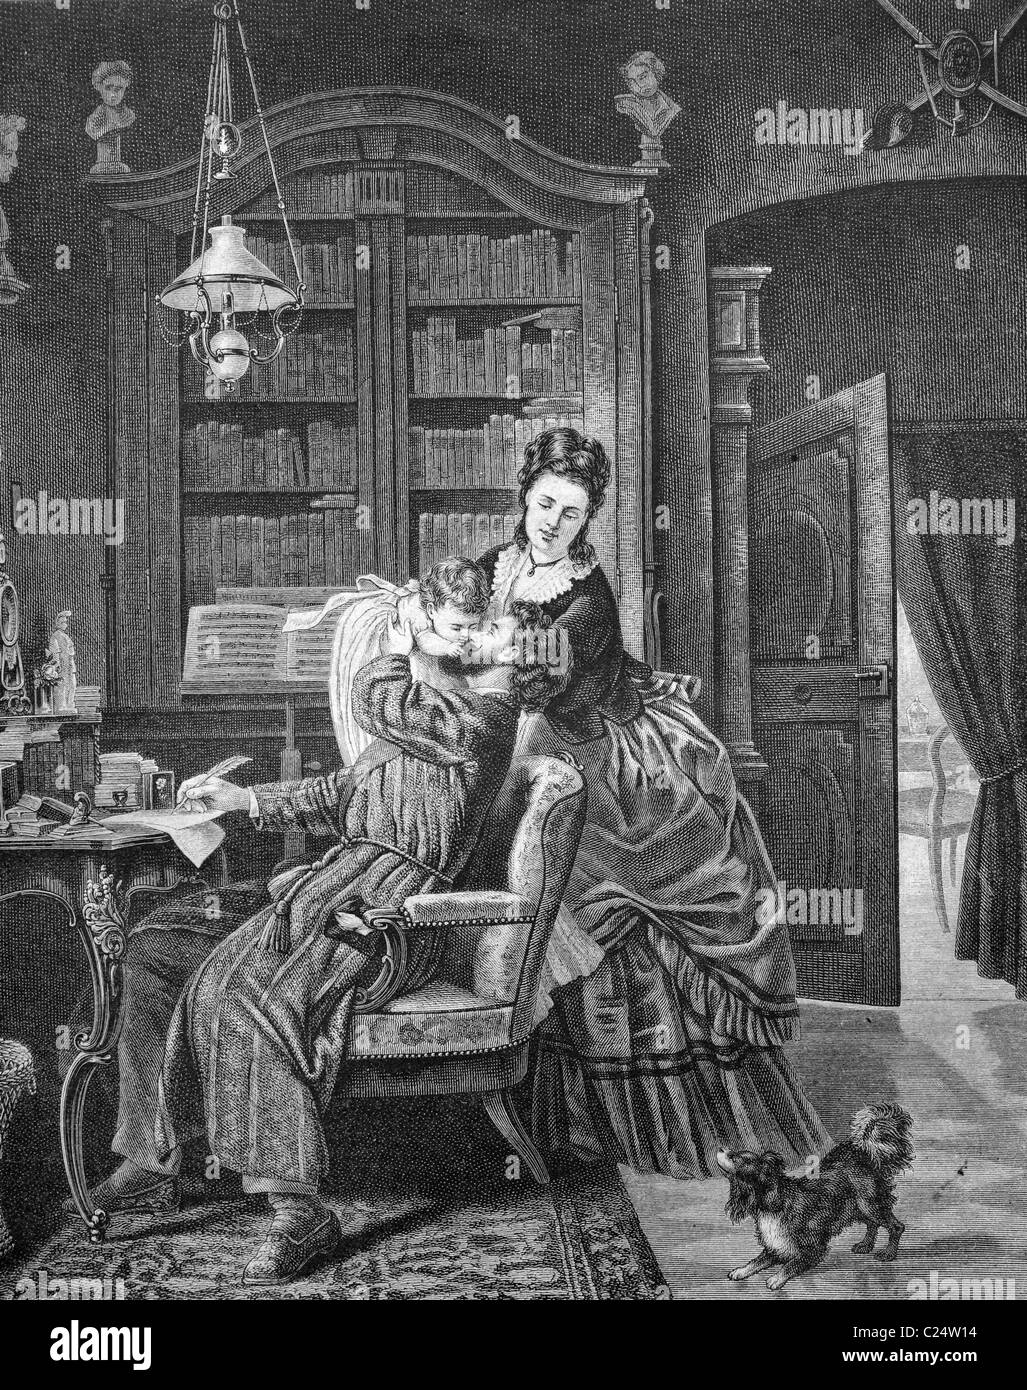 Good morning father, historical illustration, 1877 Stock Photo